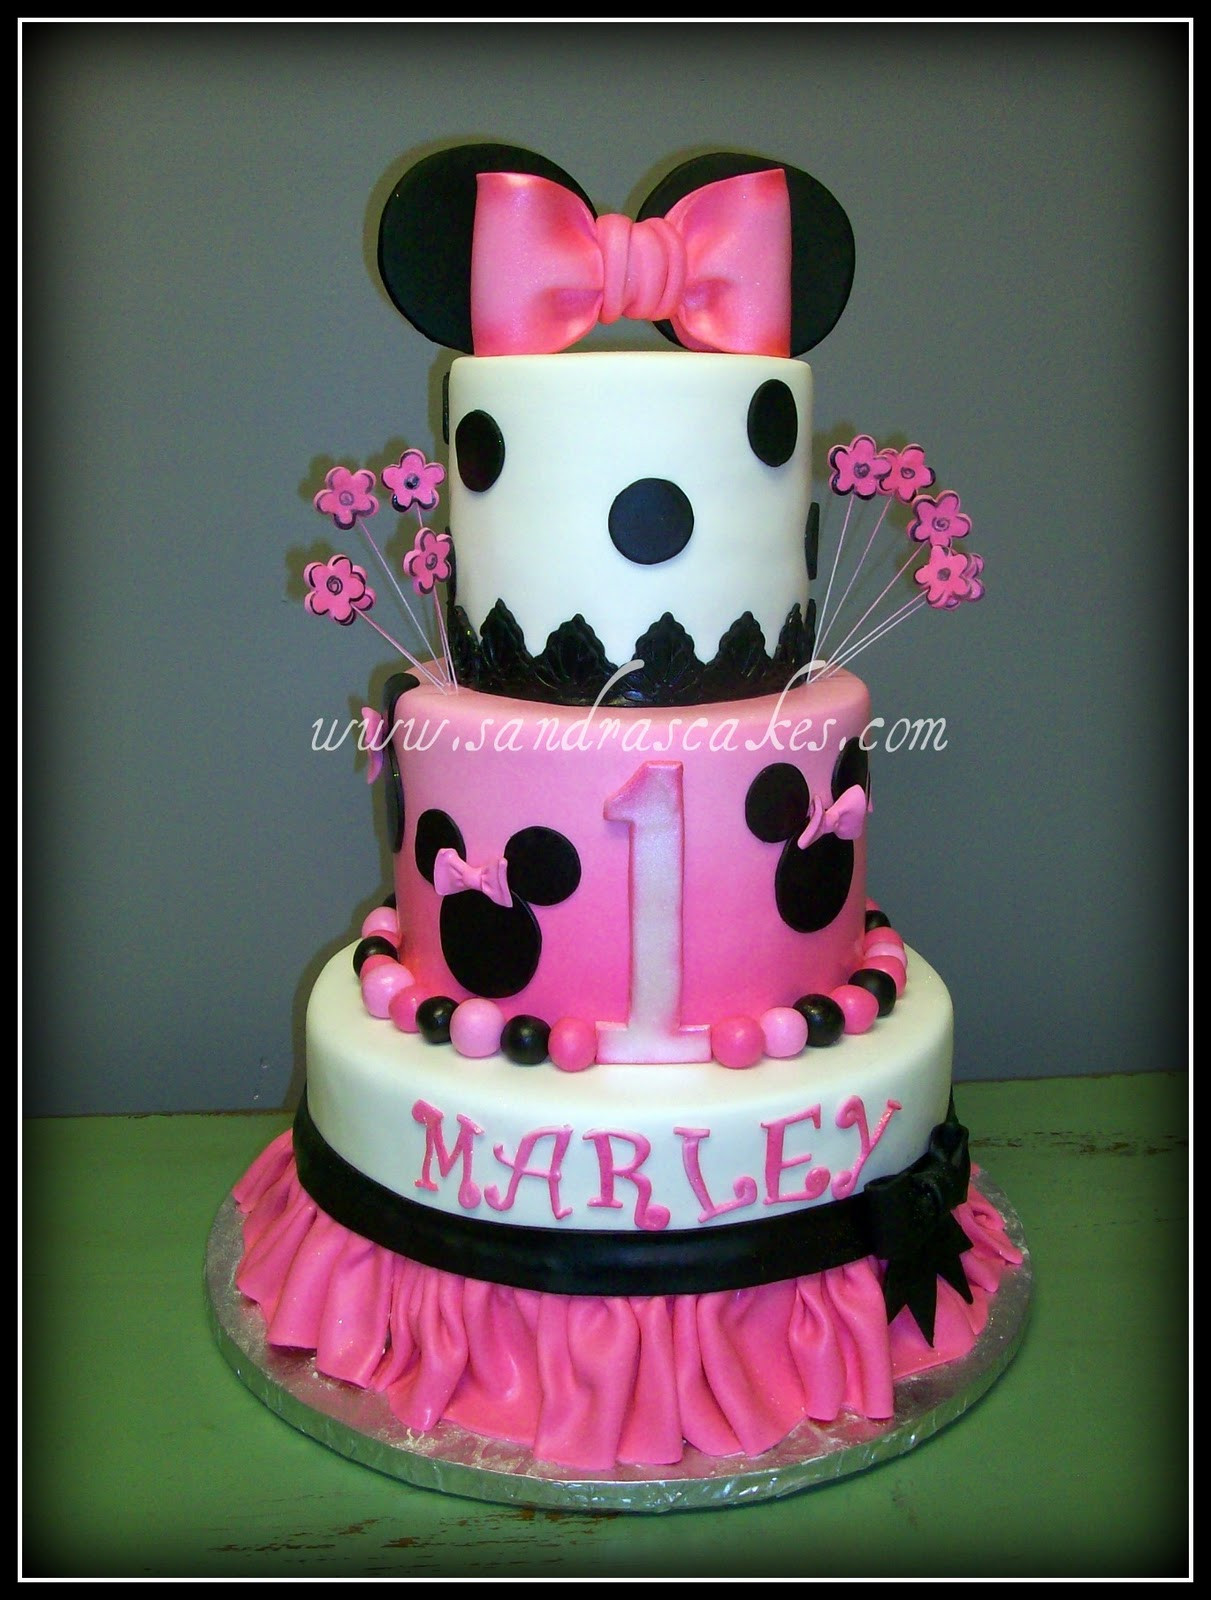 Minnie Mouse 1st Birthday Cake
 Minnie Mouse Birthday Cake